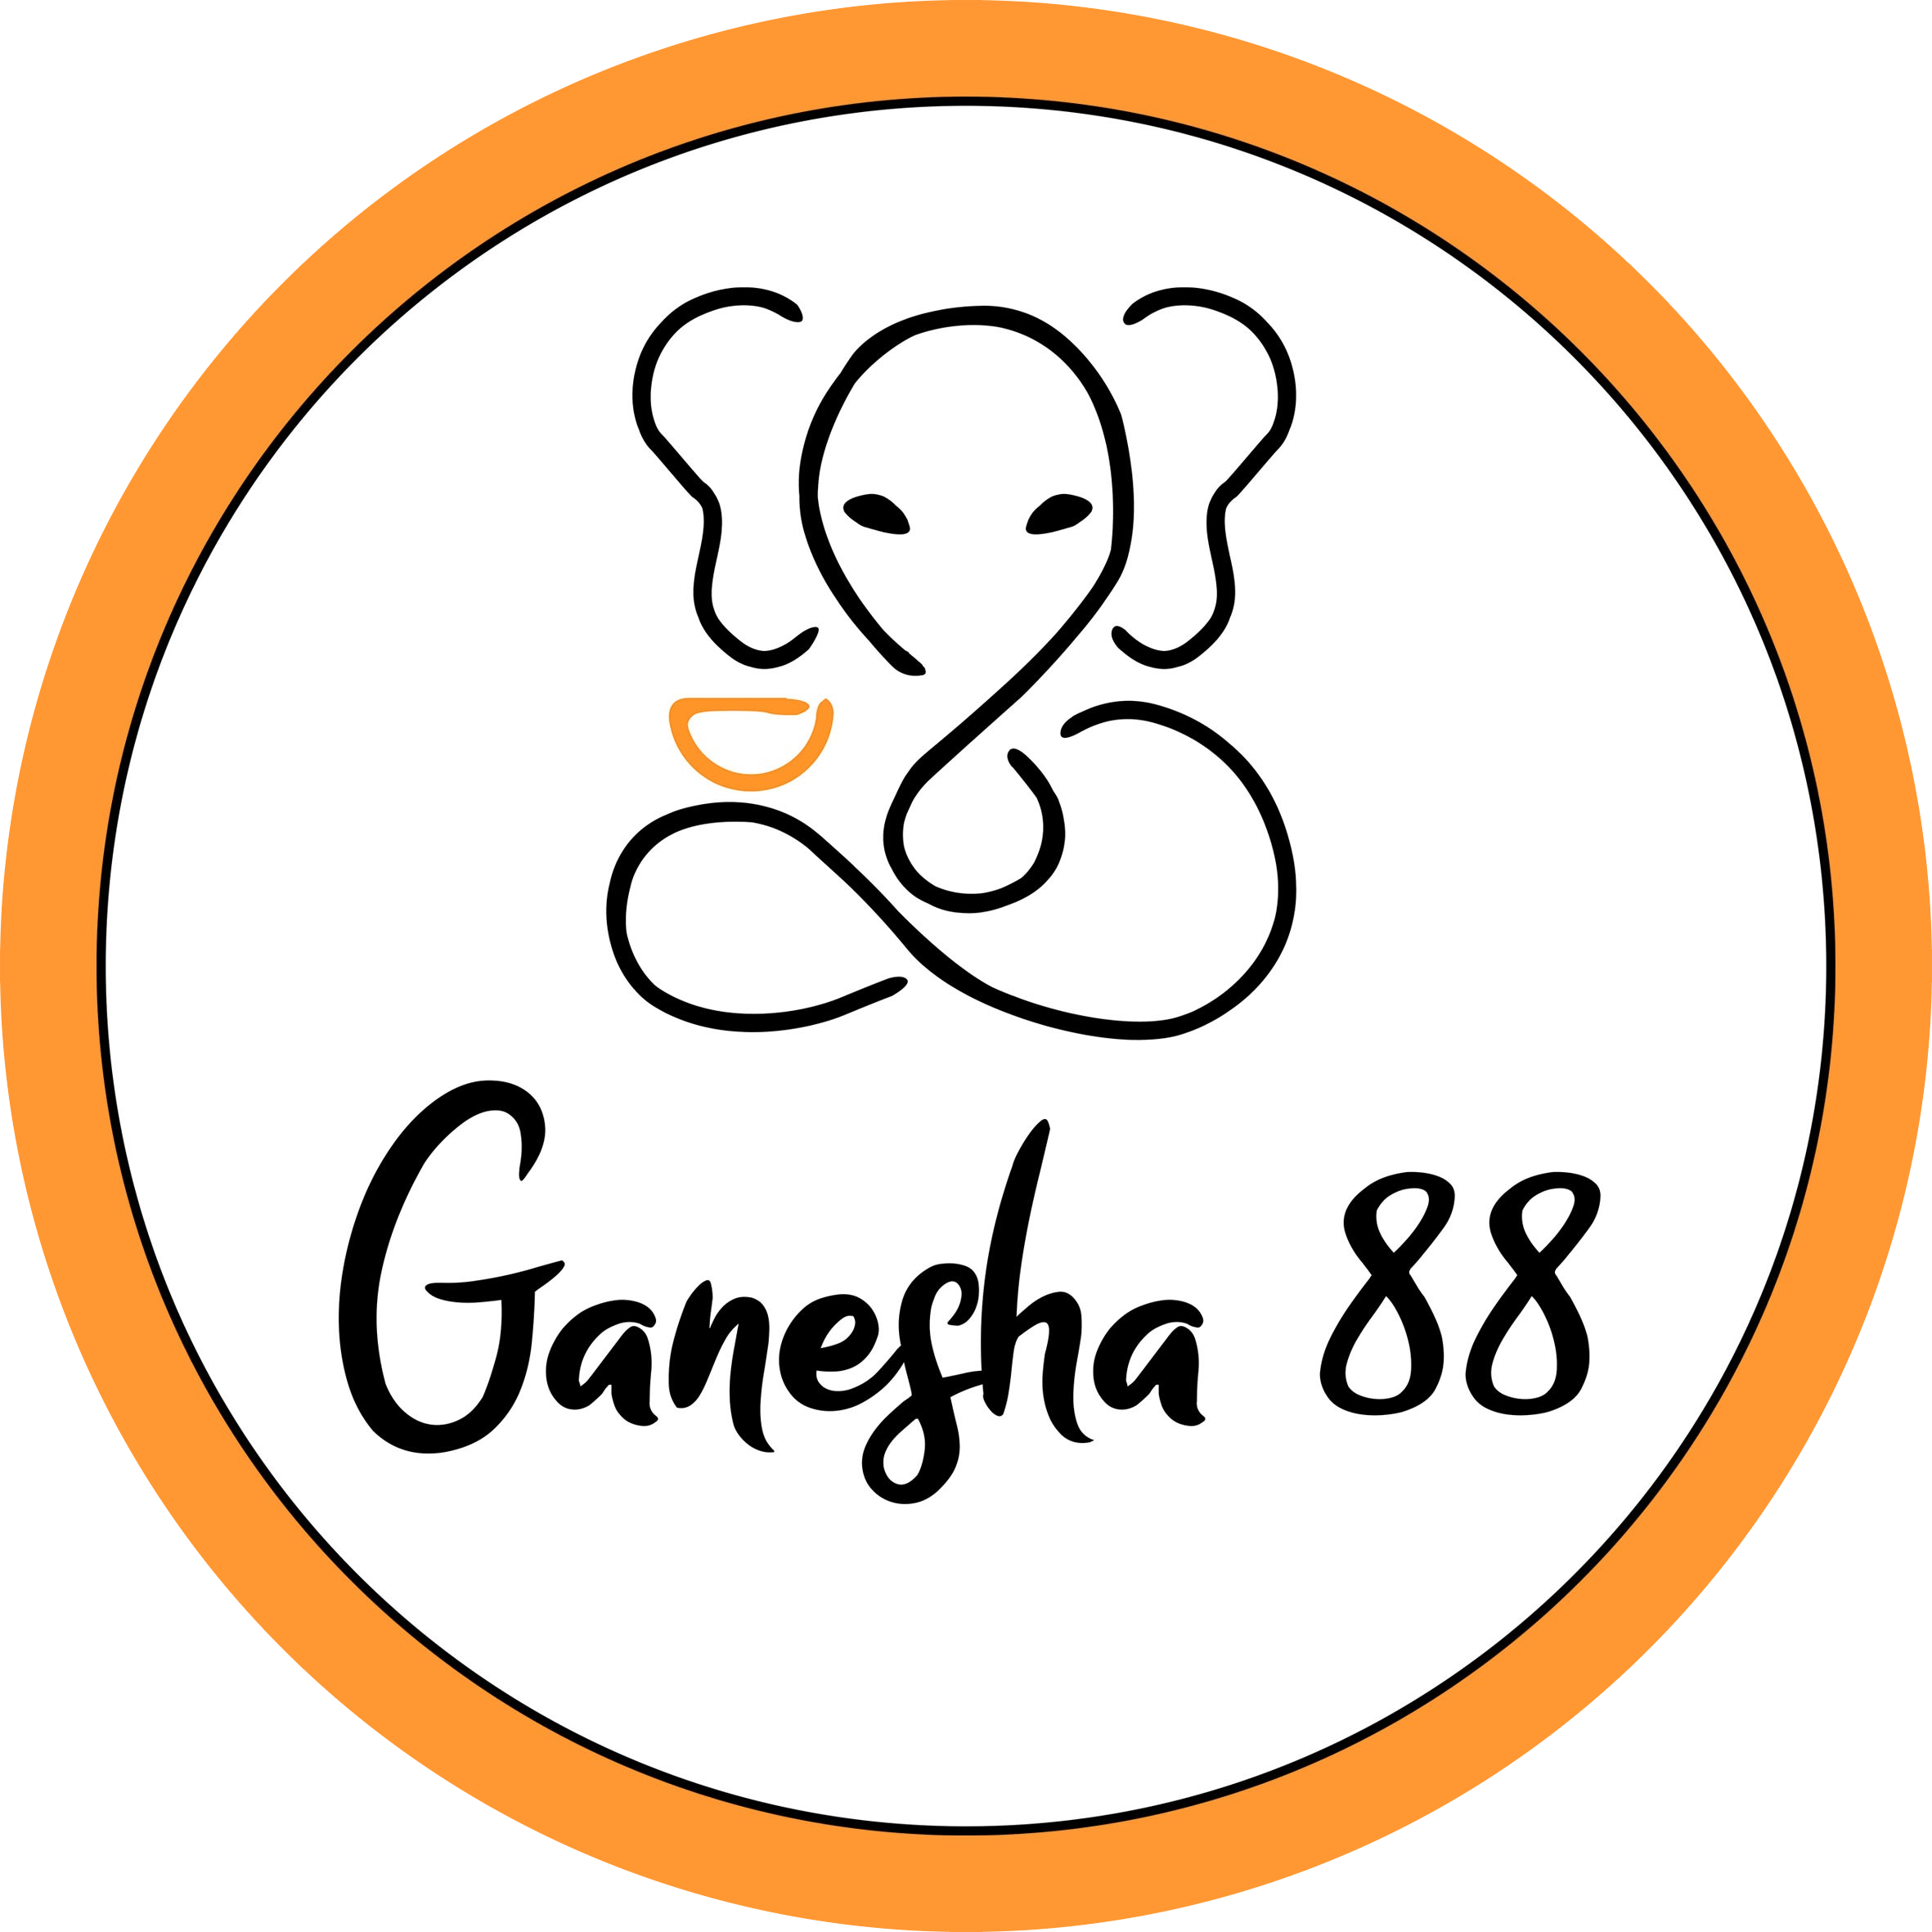 Warung Ganesha 88 Bali